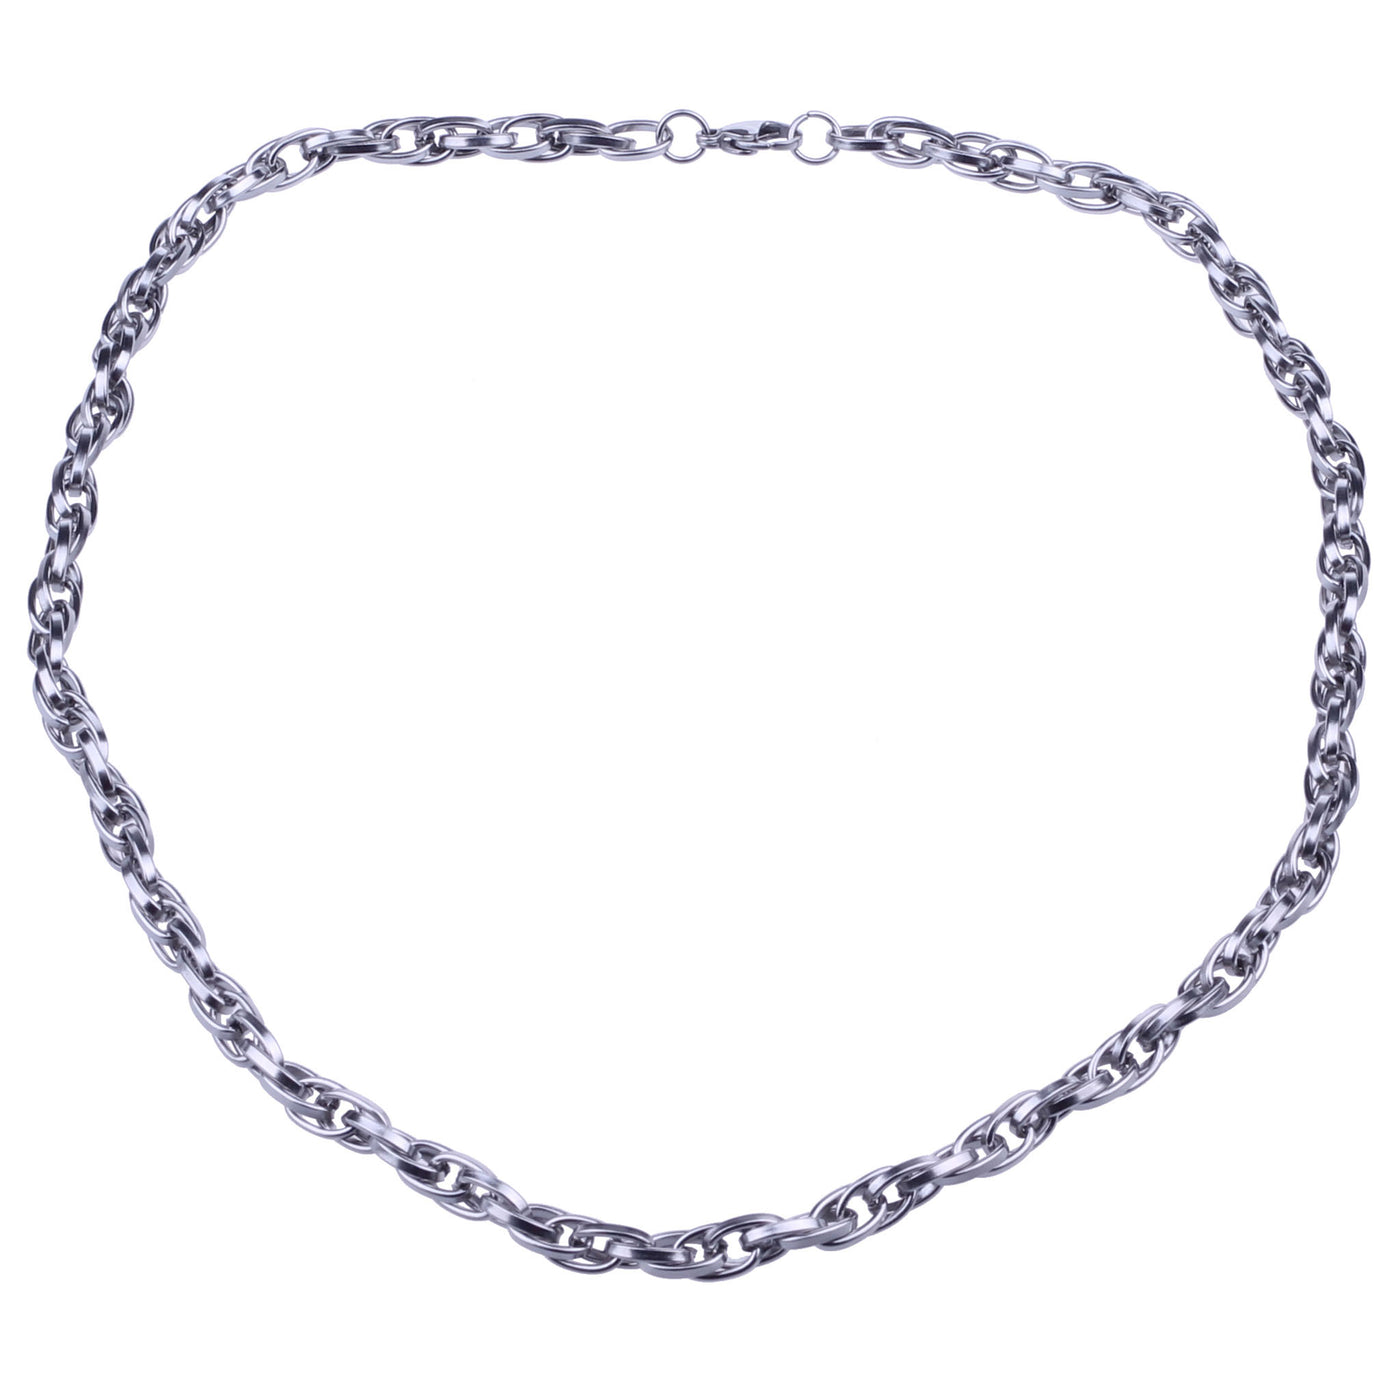 Steel chain 58cm